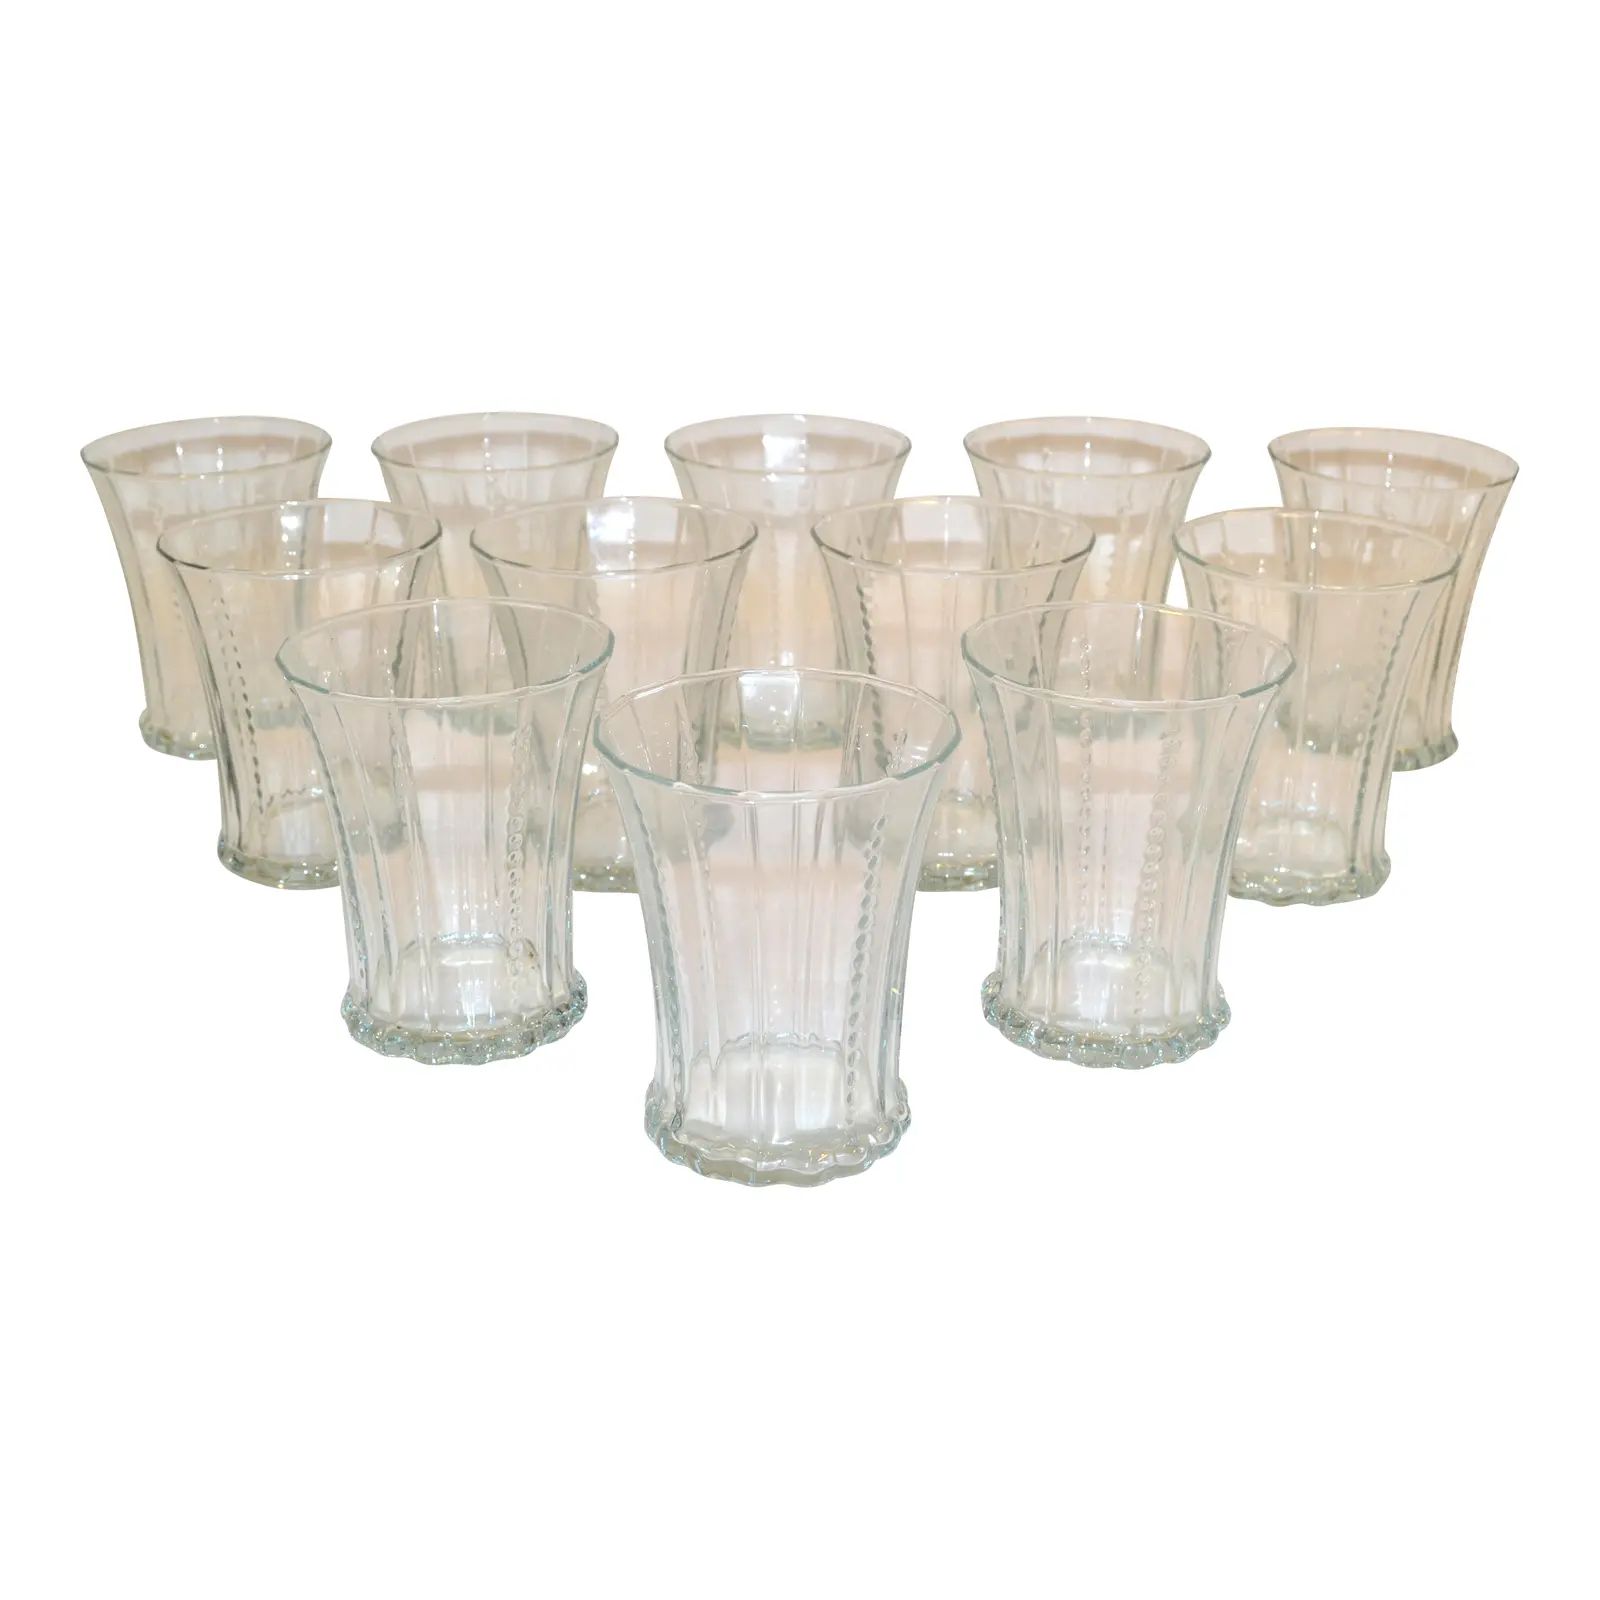 Set 12 Blown Bubble Glass Mid-Century Modern Drinking Glasses Glassware Italy | Chairish